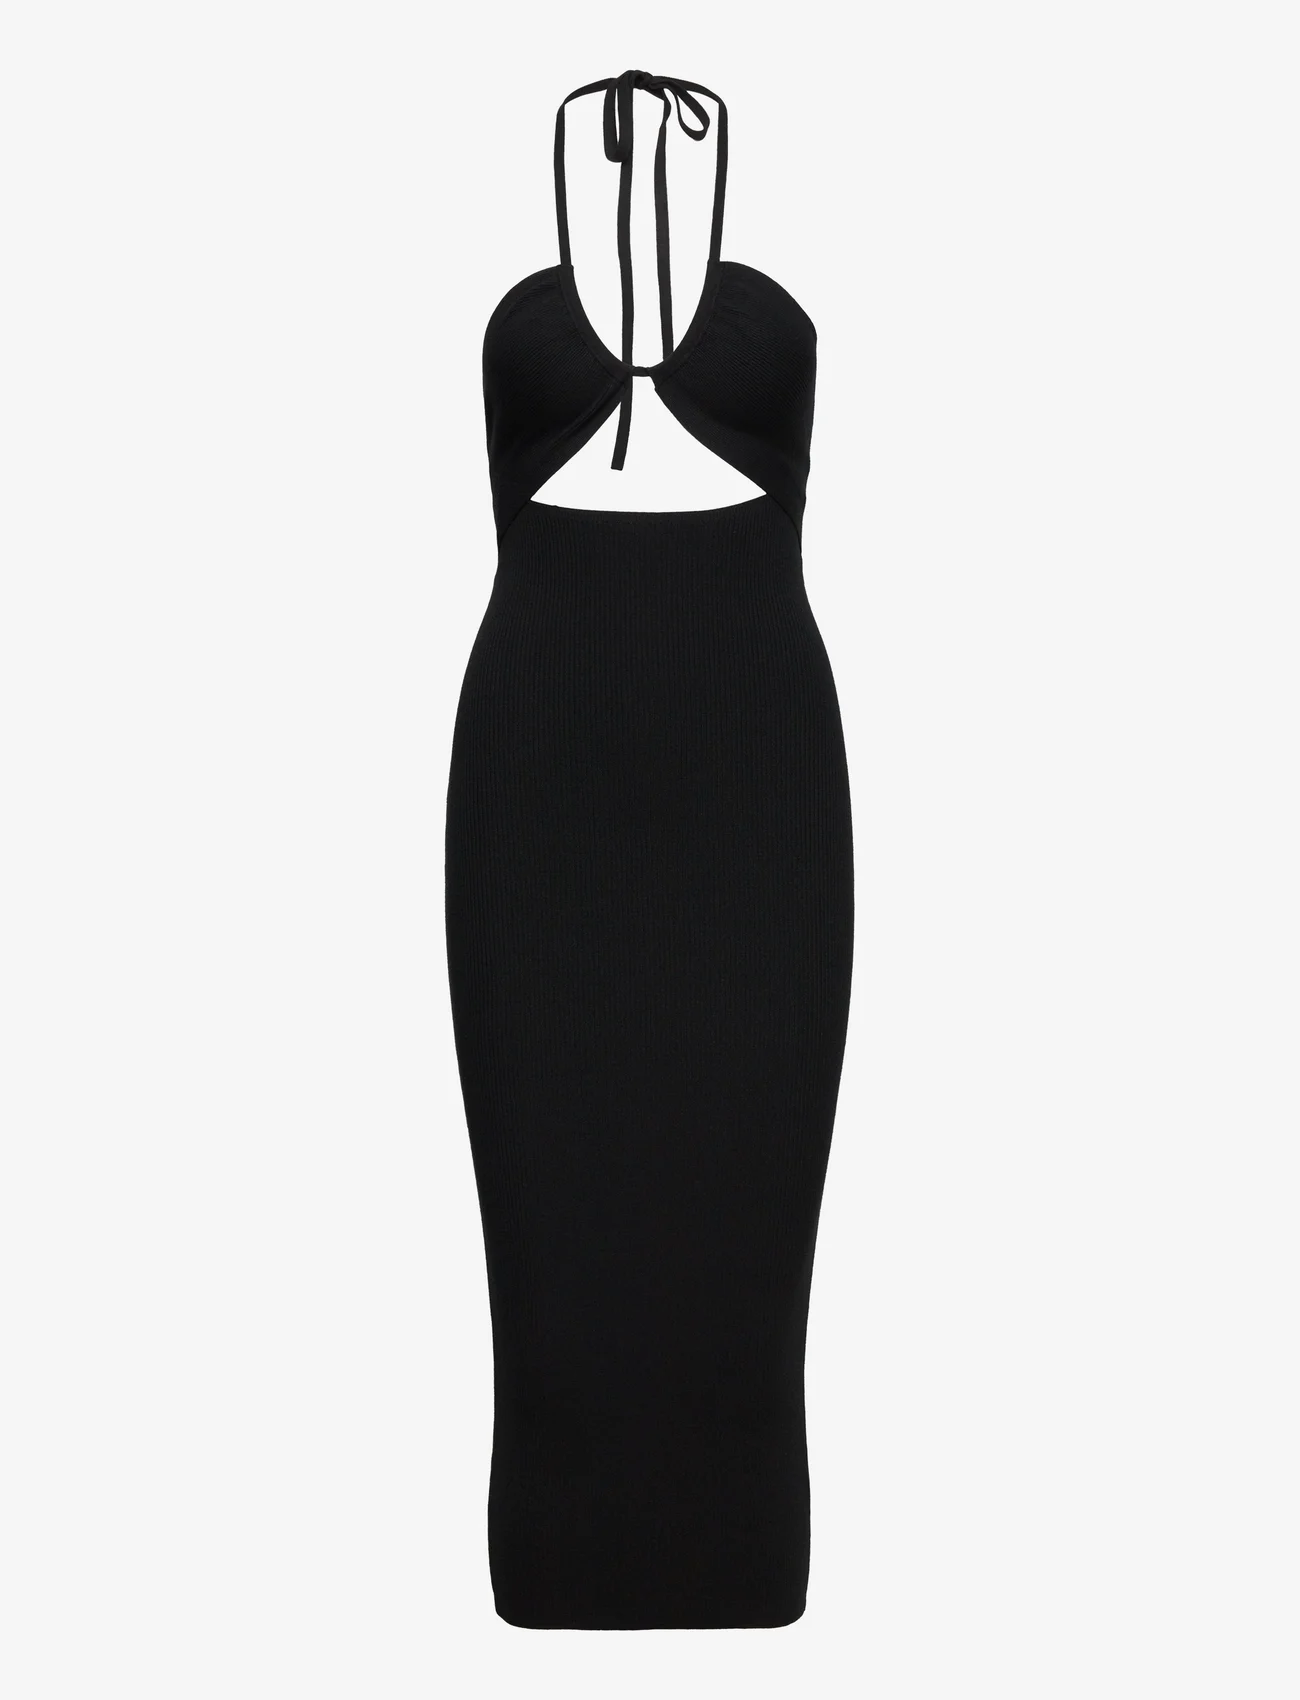 AllSaints - TONI DRESS - bodycon dresses - black - 0